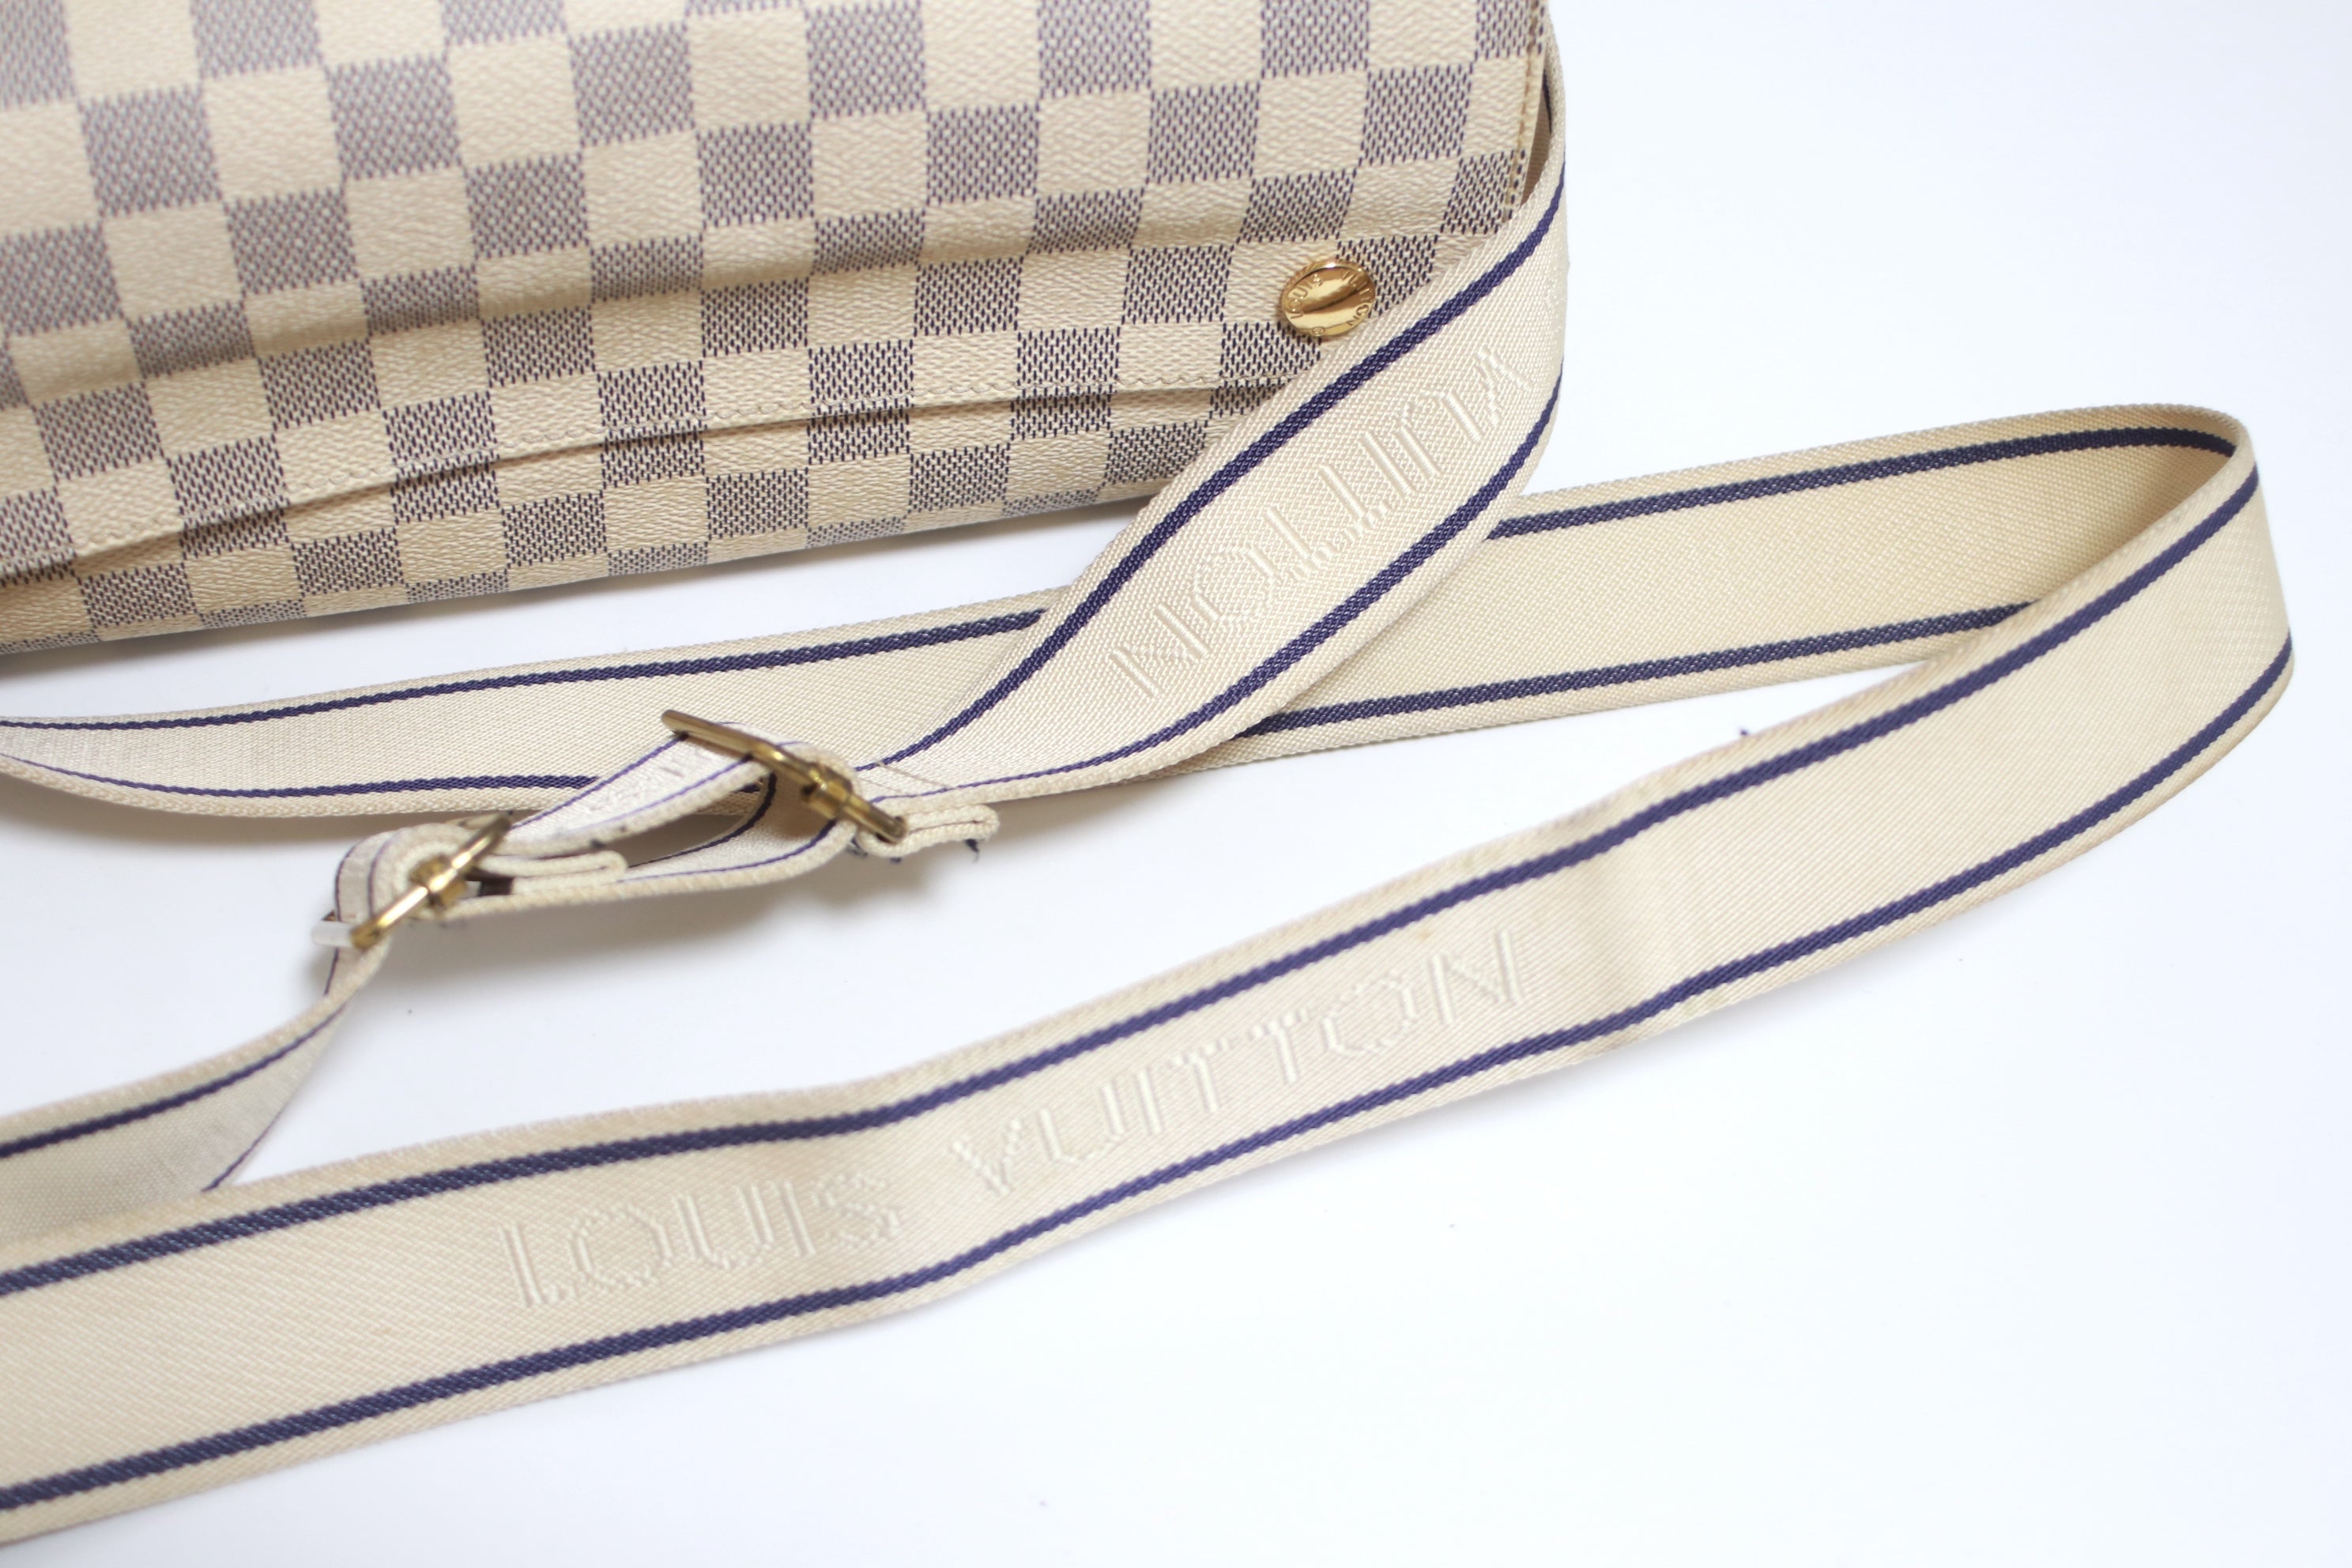 Louis Vuitton Naviglio Damiere Azur Messenger Bag Used (8229)